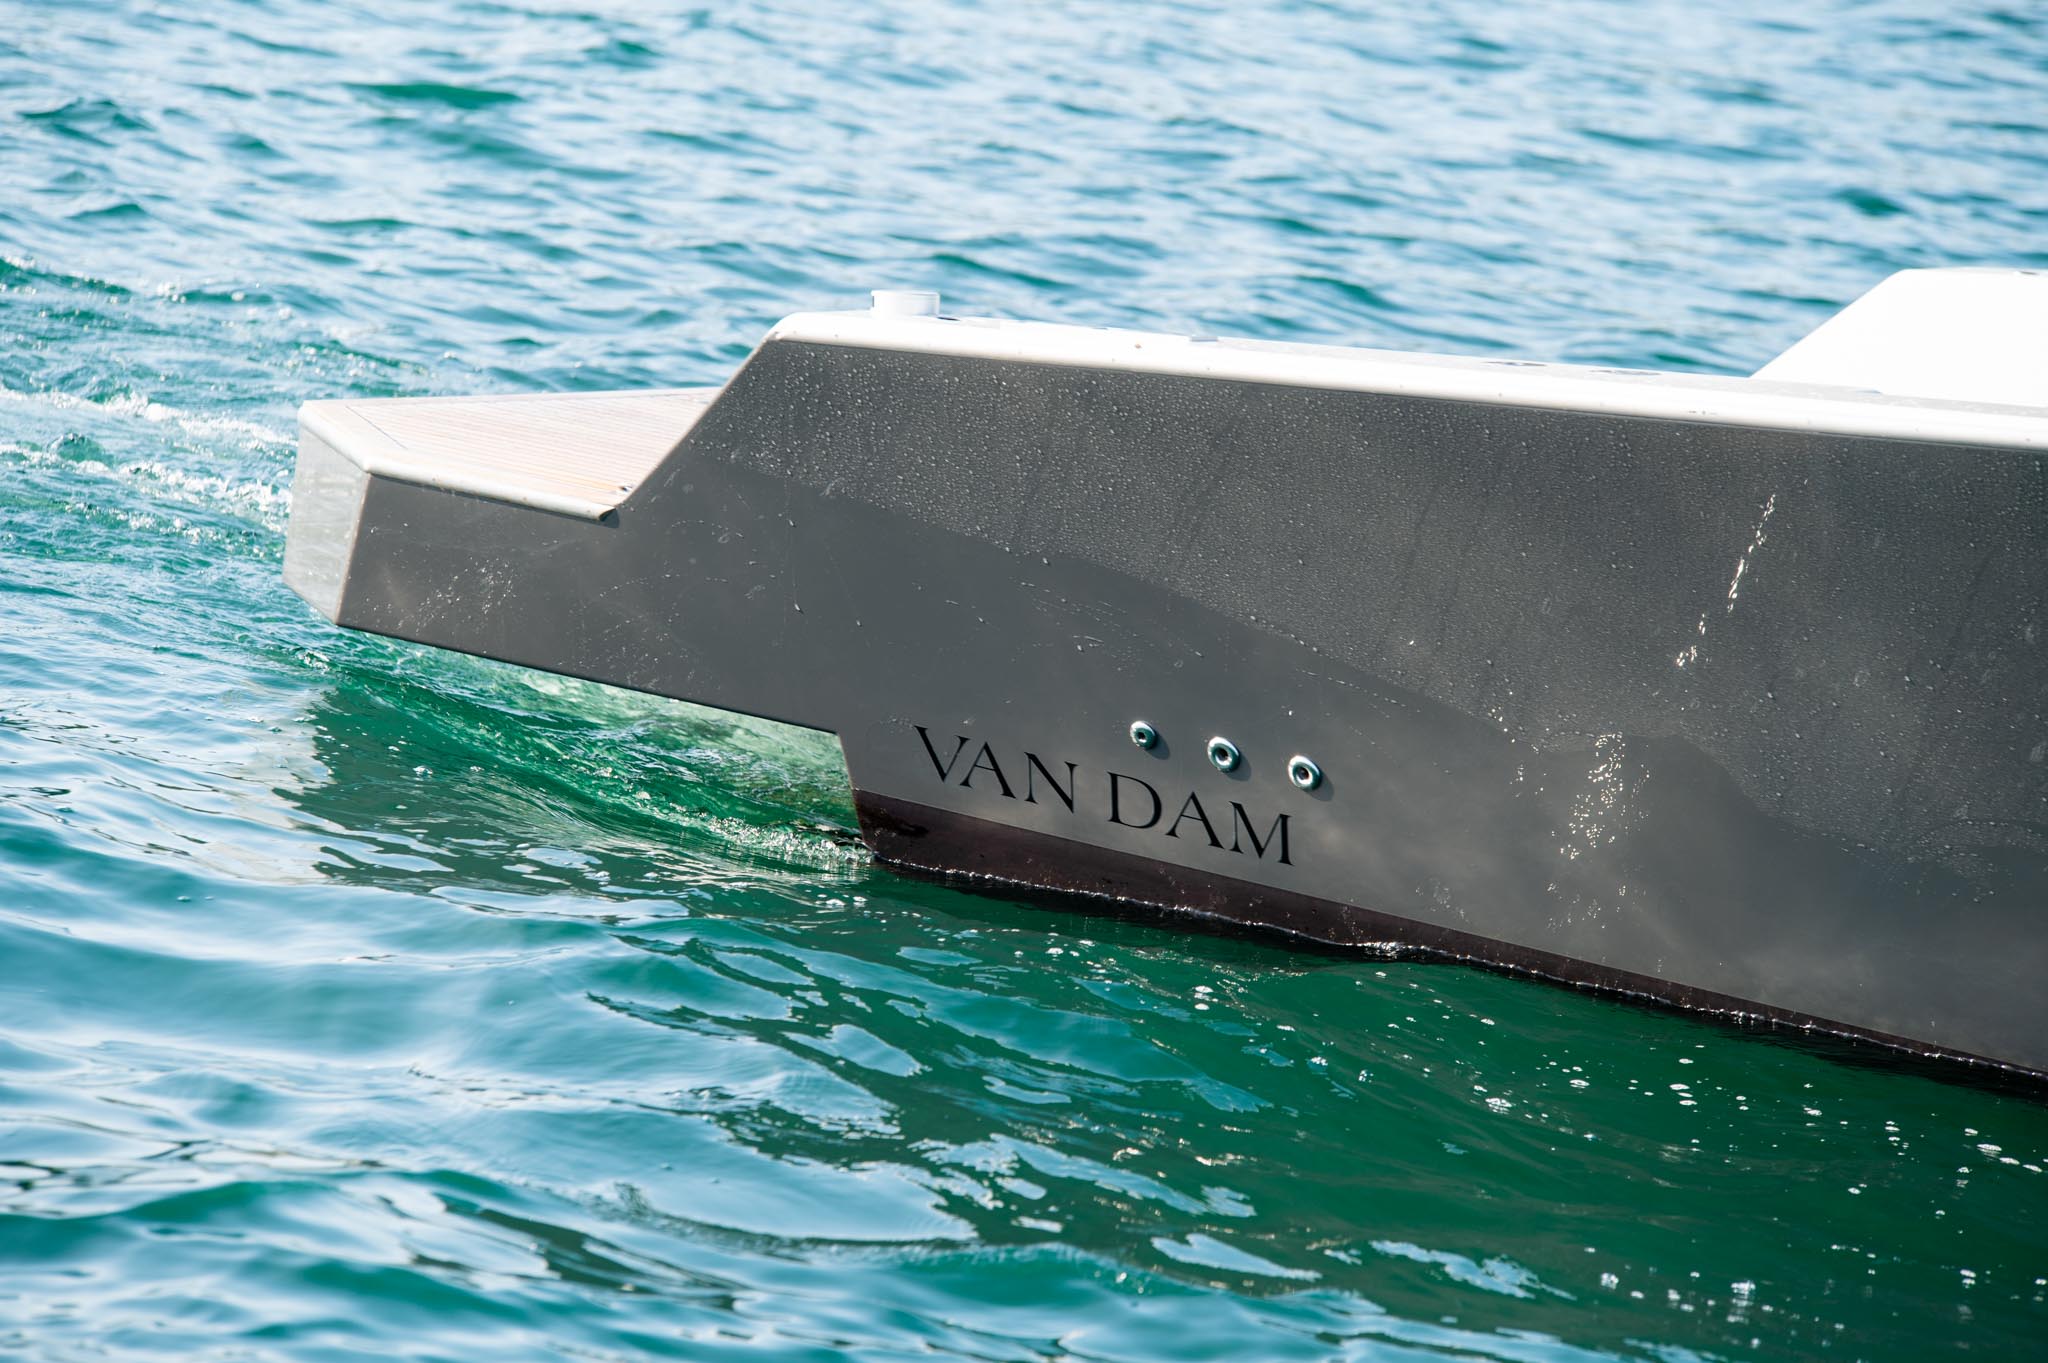 Van Dam logo on Chiara